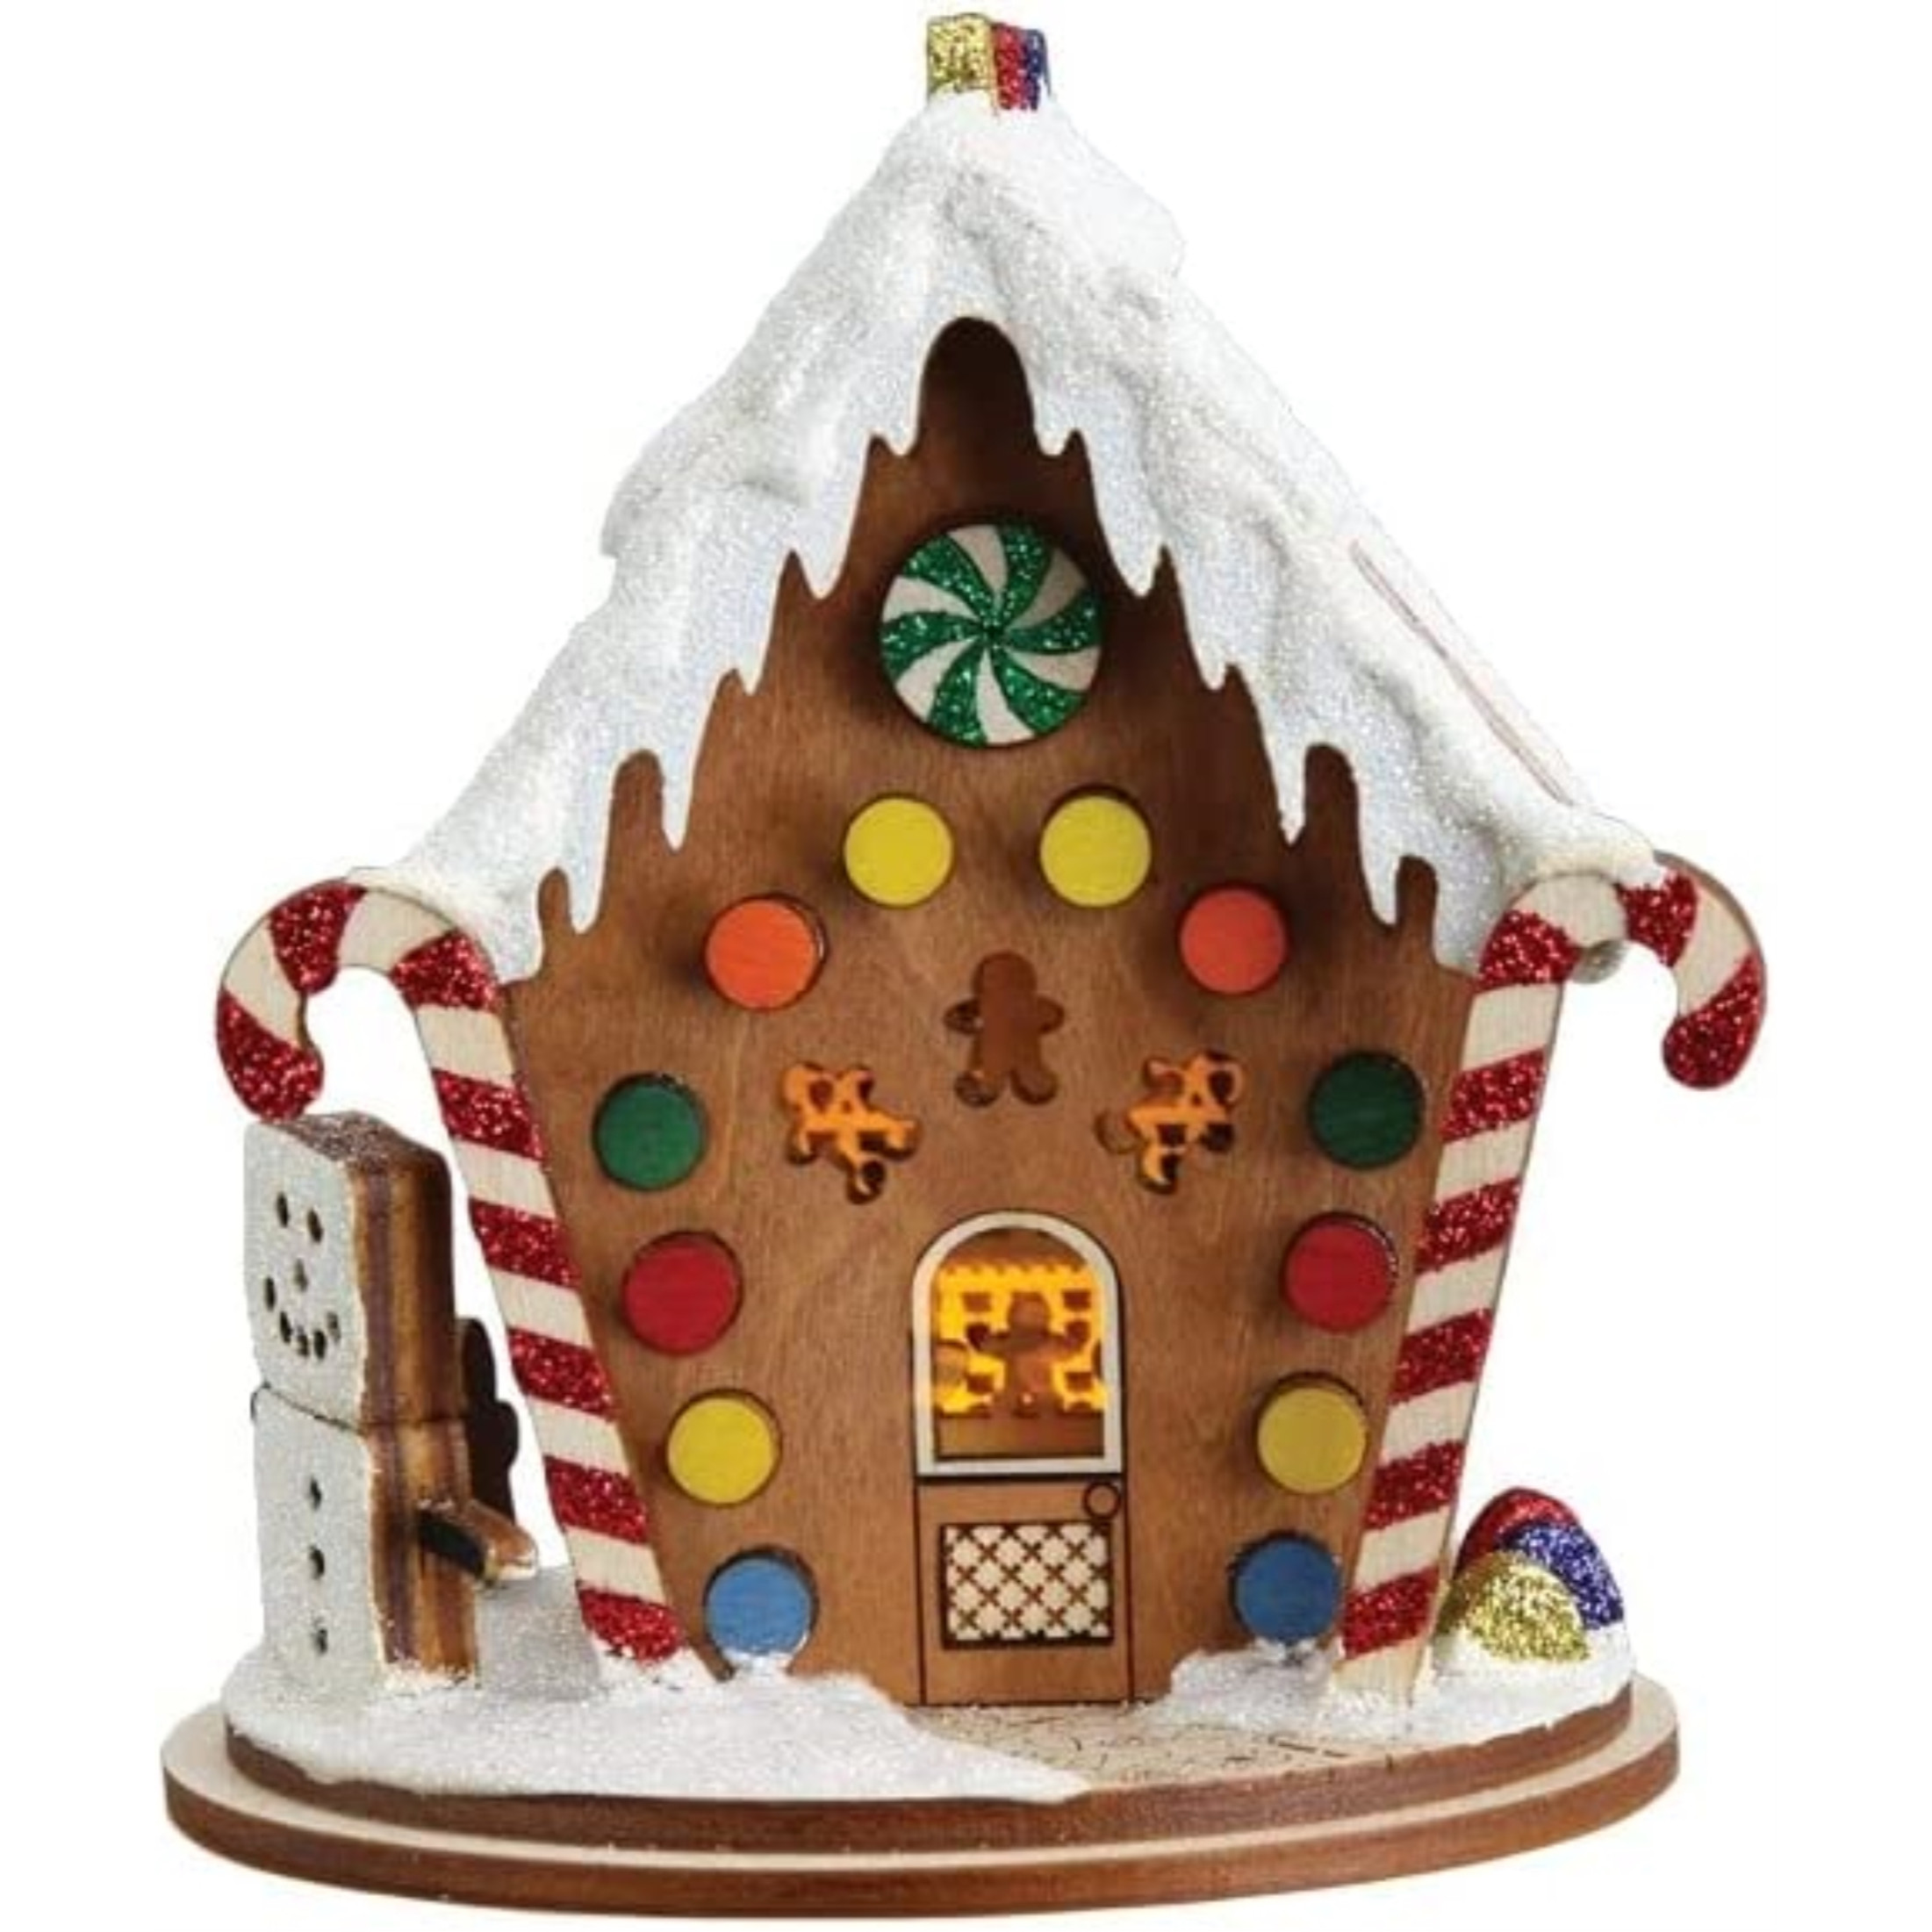 Old World Christmas Hansel & Gretel Gingerbread House Ornament For Christmas Tree, Light Up